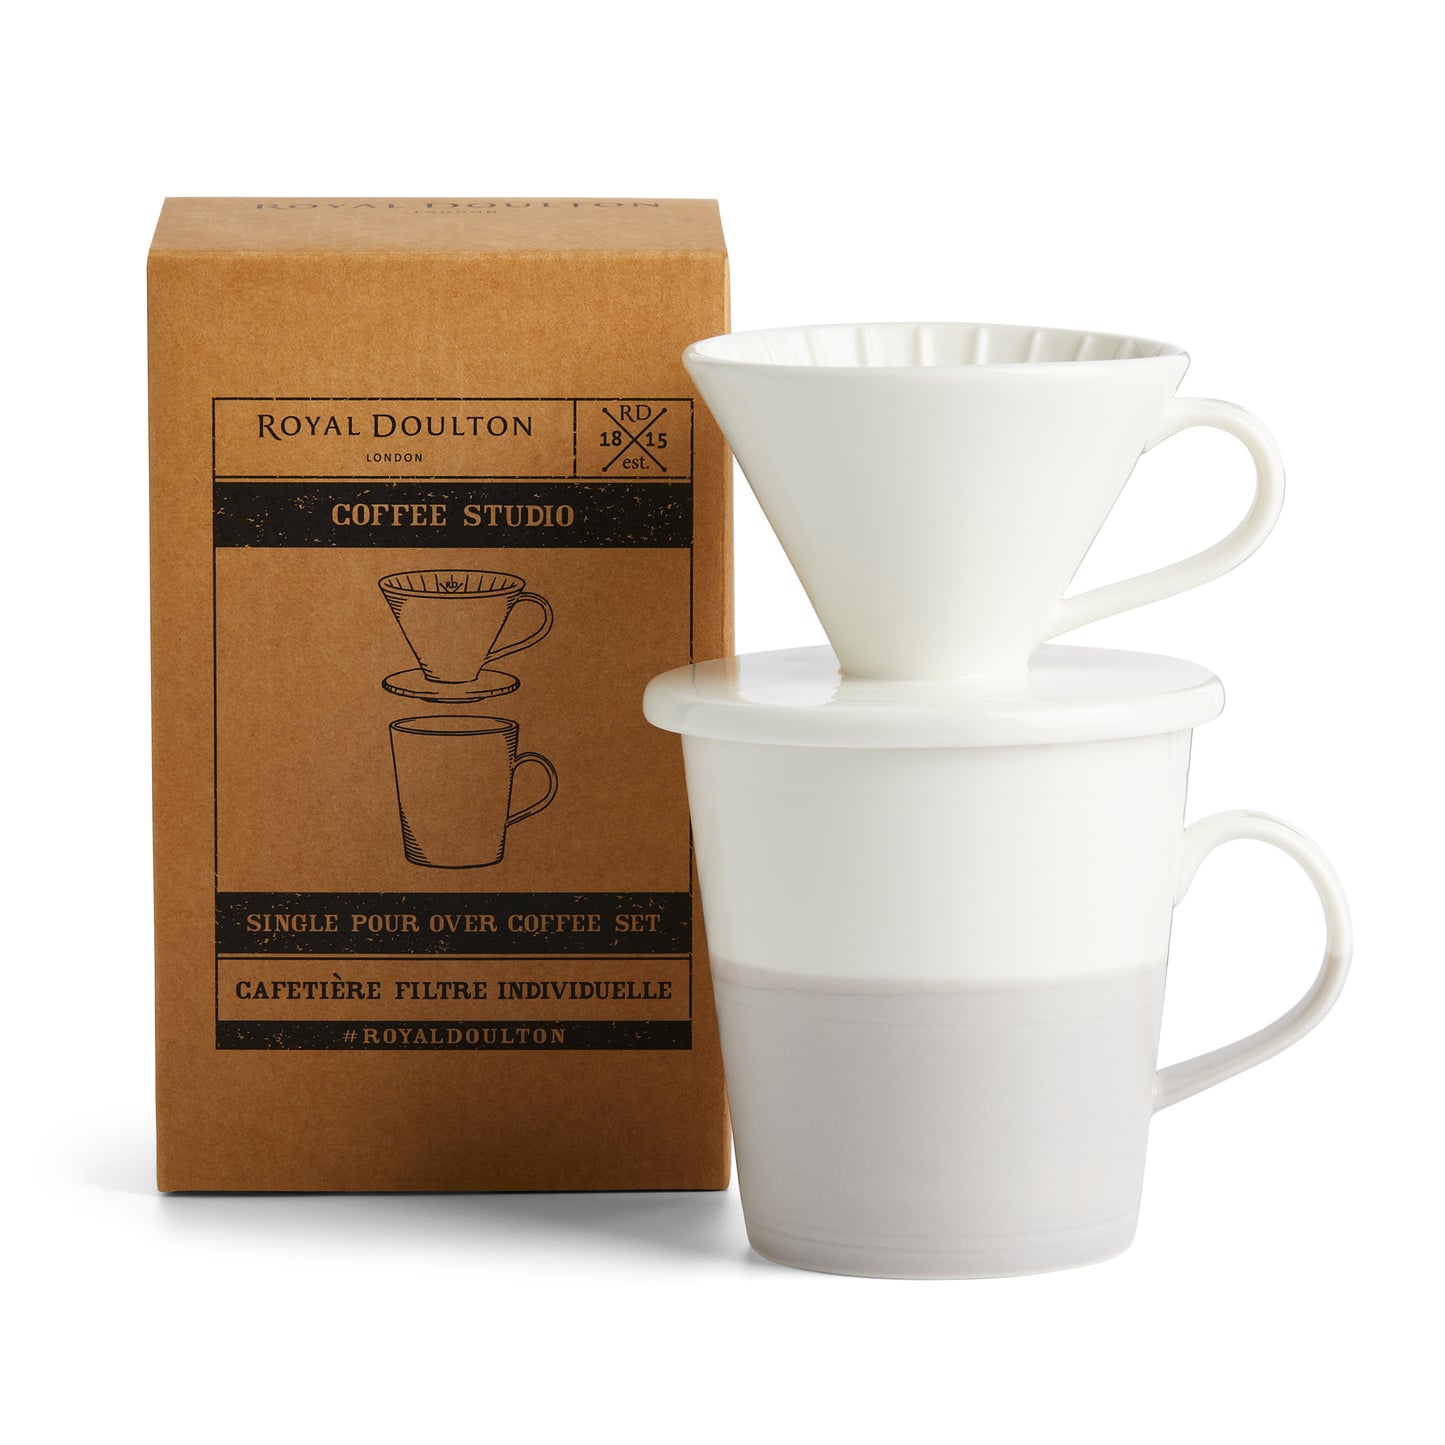 Royal Doulton 1815 Coffee Studio Coffee Dripper and Mug Set